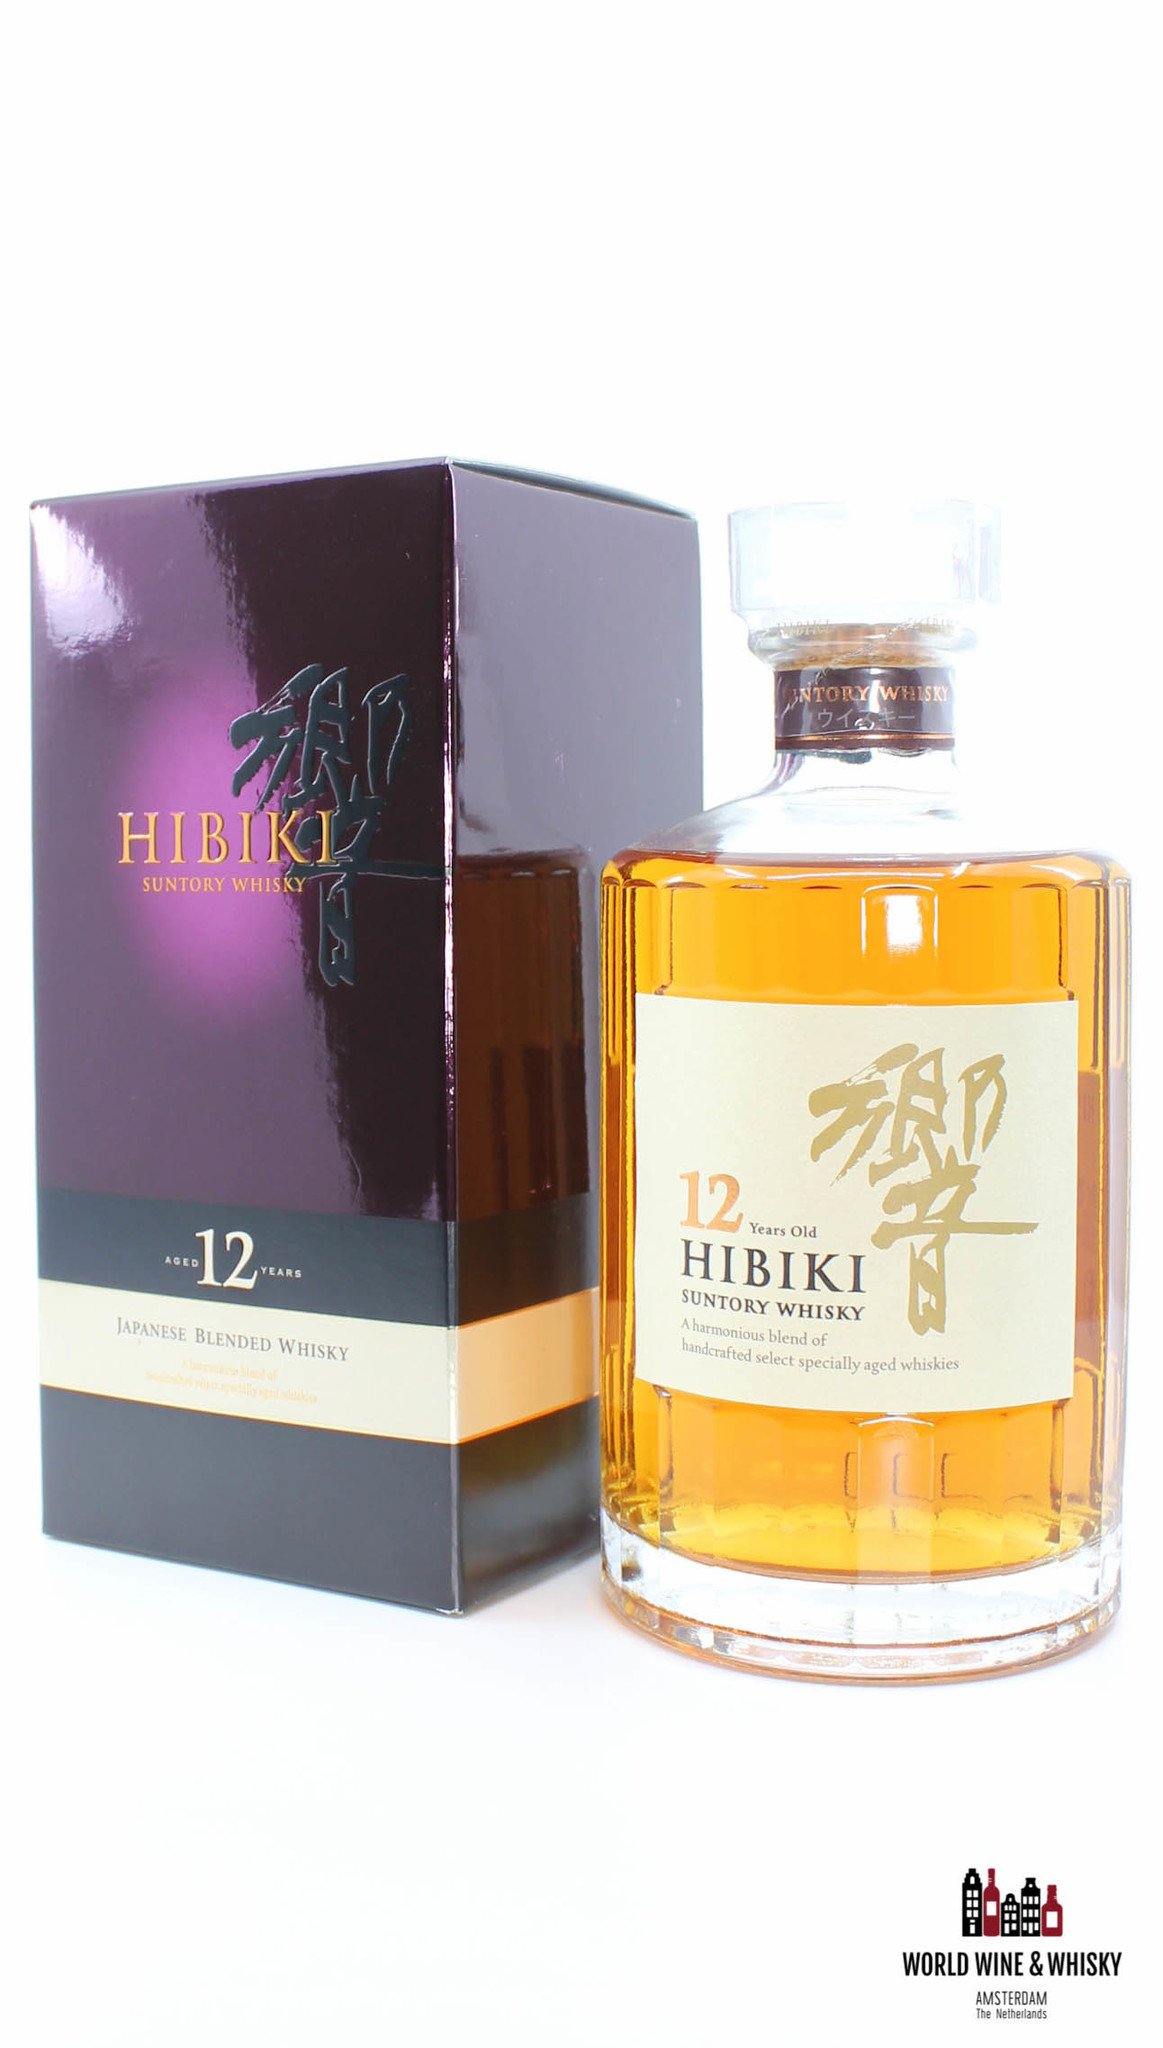 Hibiki Aged 17 years Suntory Whiskey